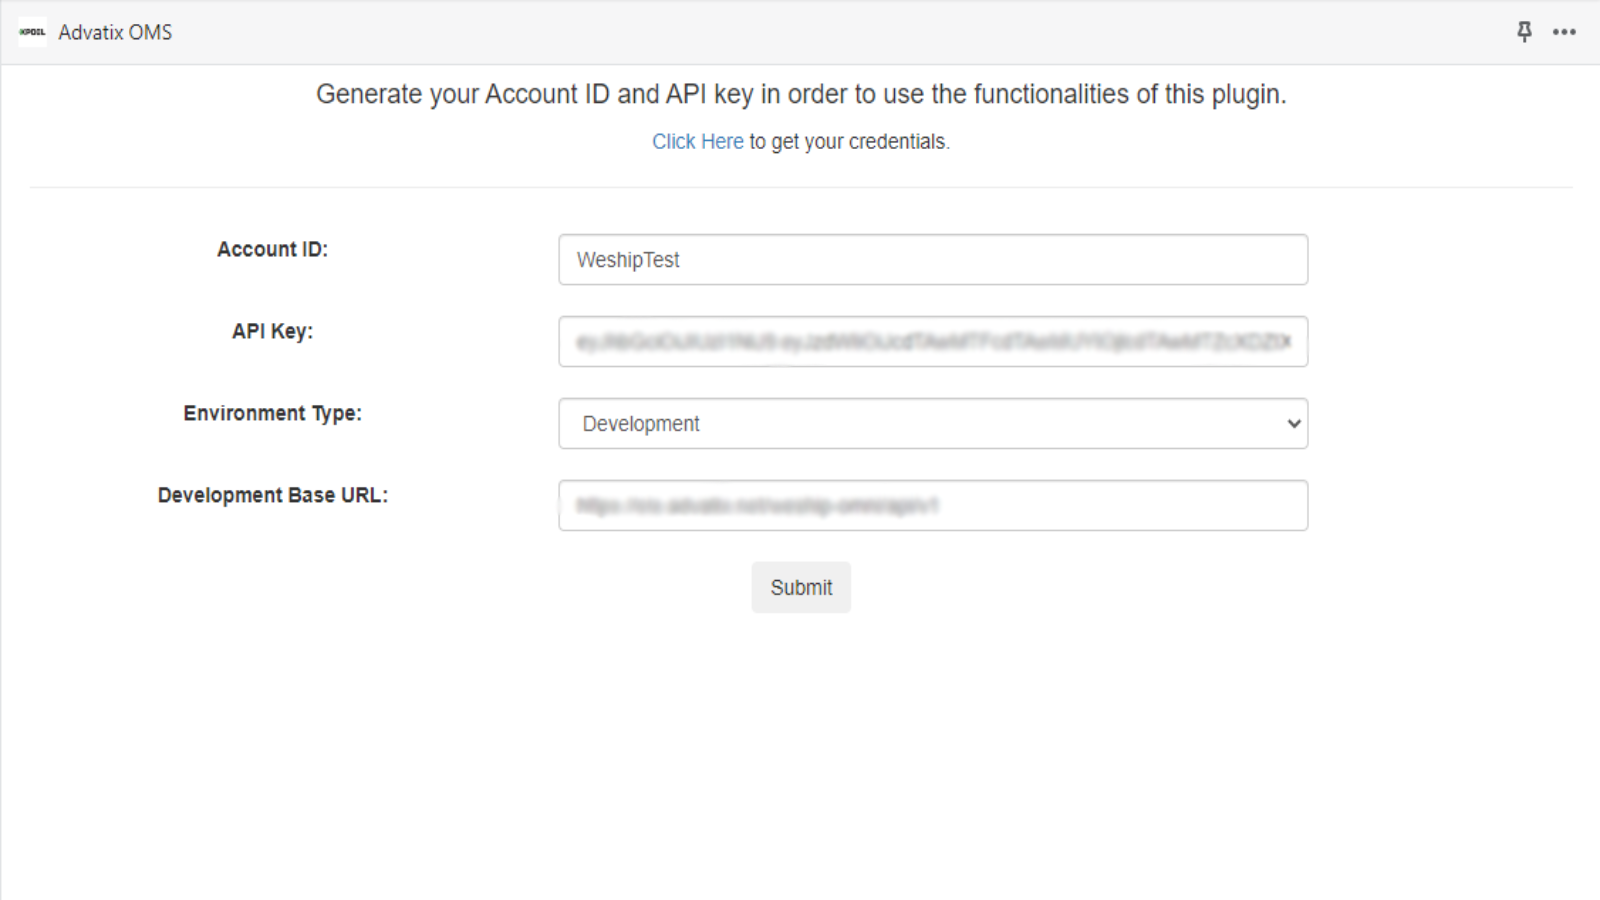 Account ID & API Key